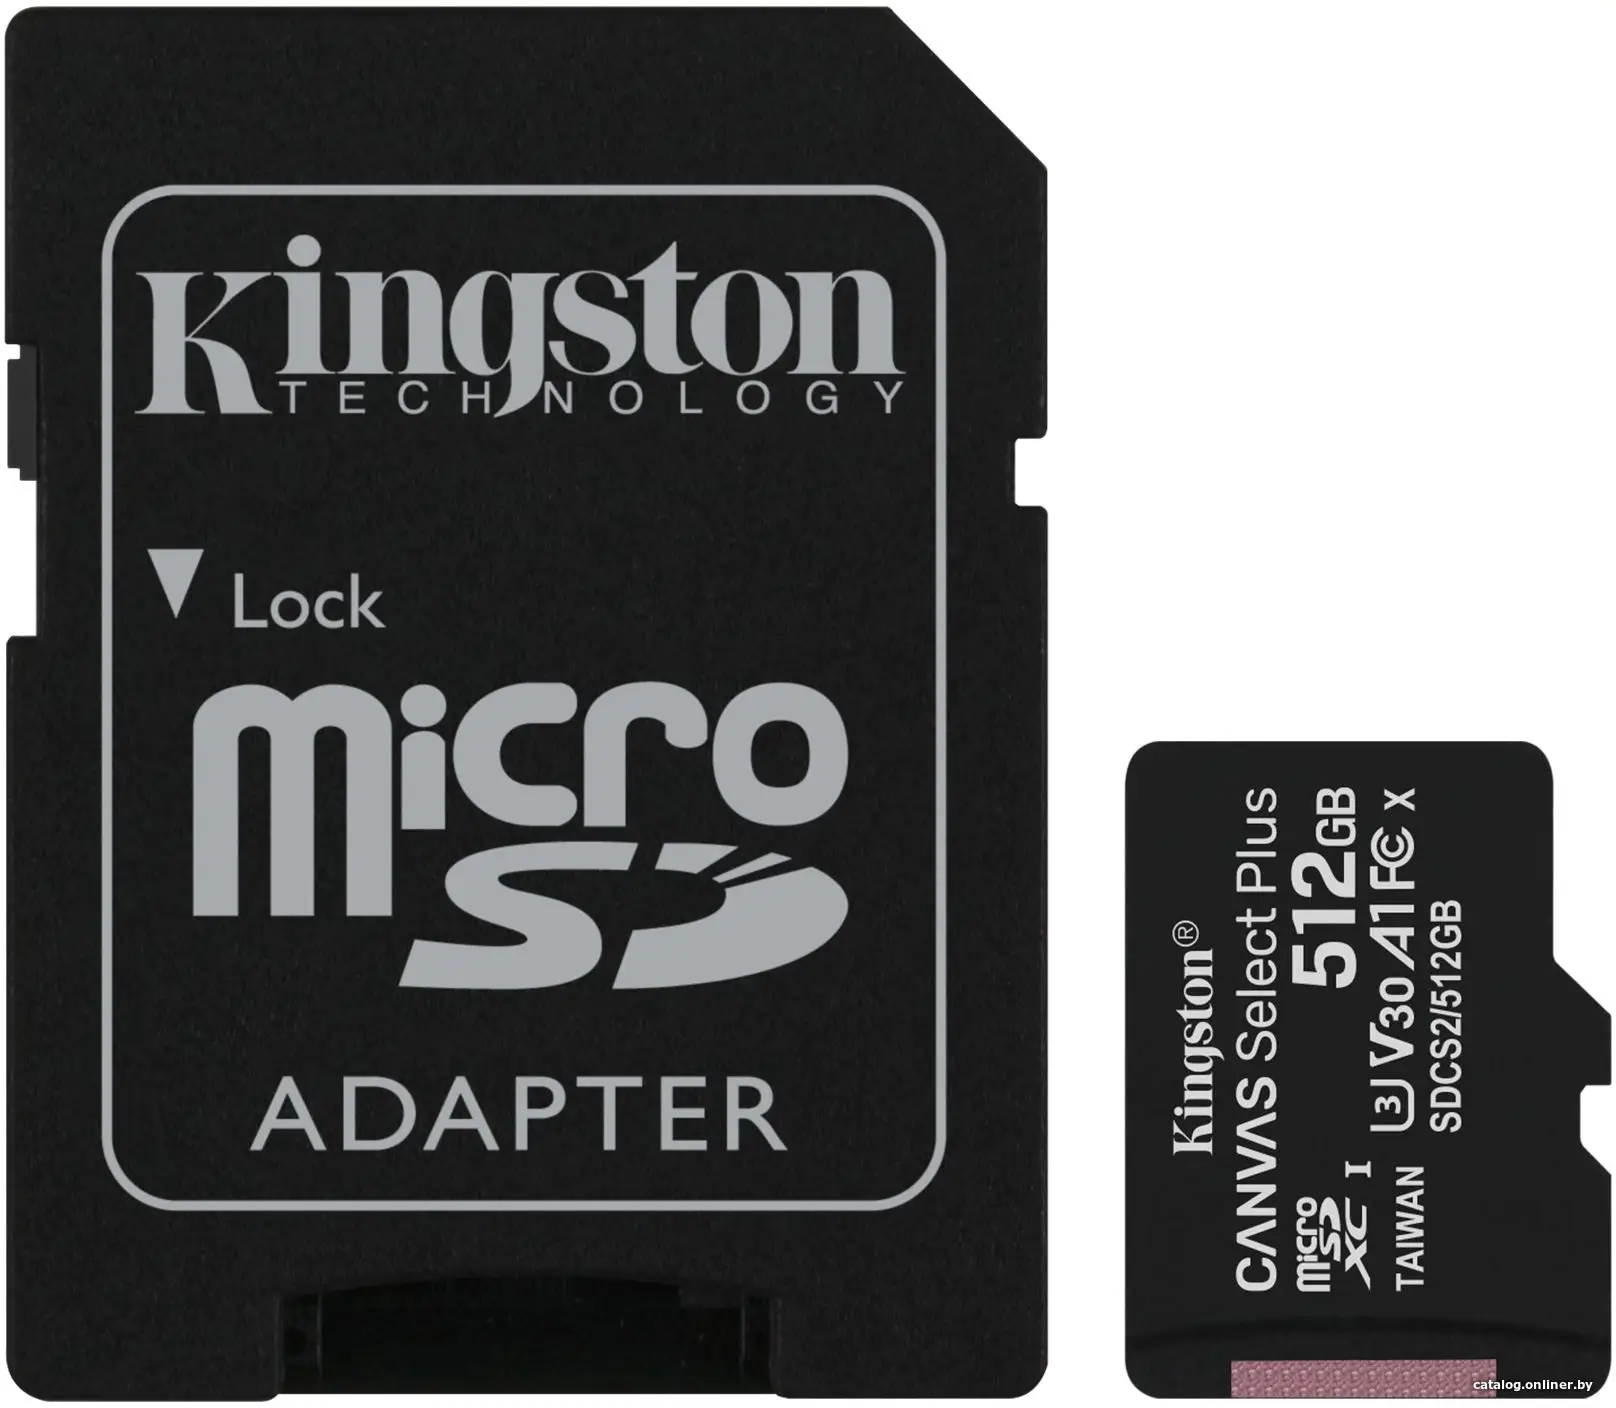 Купить Kingston 512GB micSDXC Canvas Select Plus 100R A1 C10 Card + ADP, EAN: 740617298727, цена, опт и розница